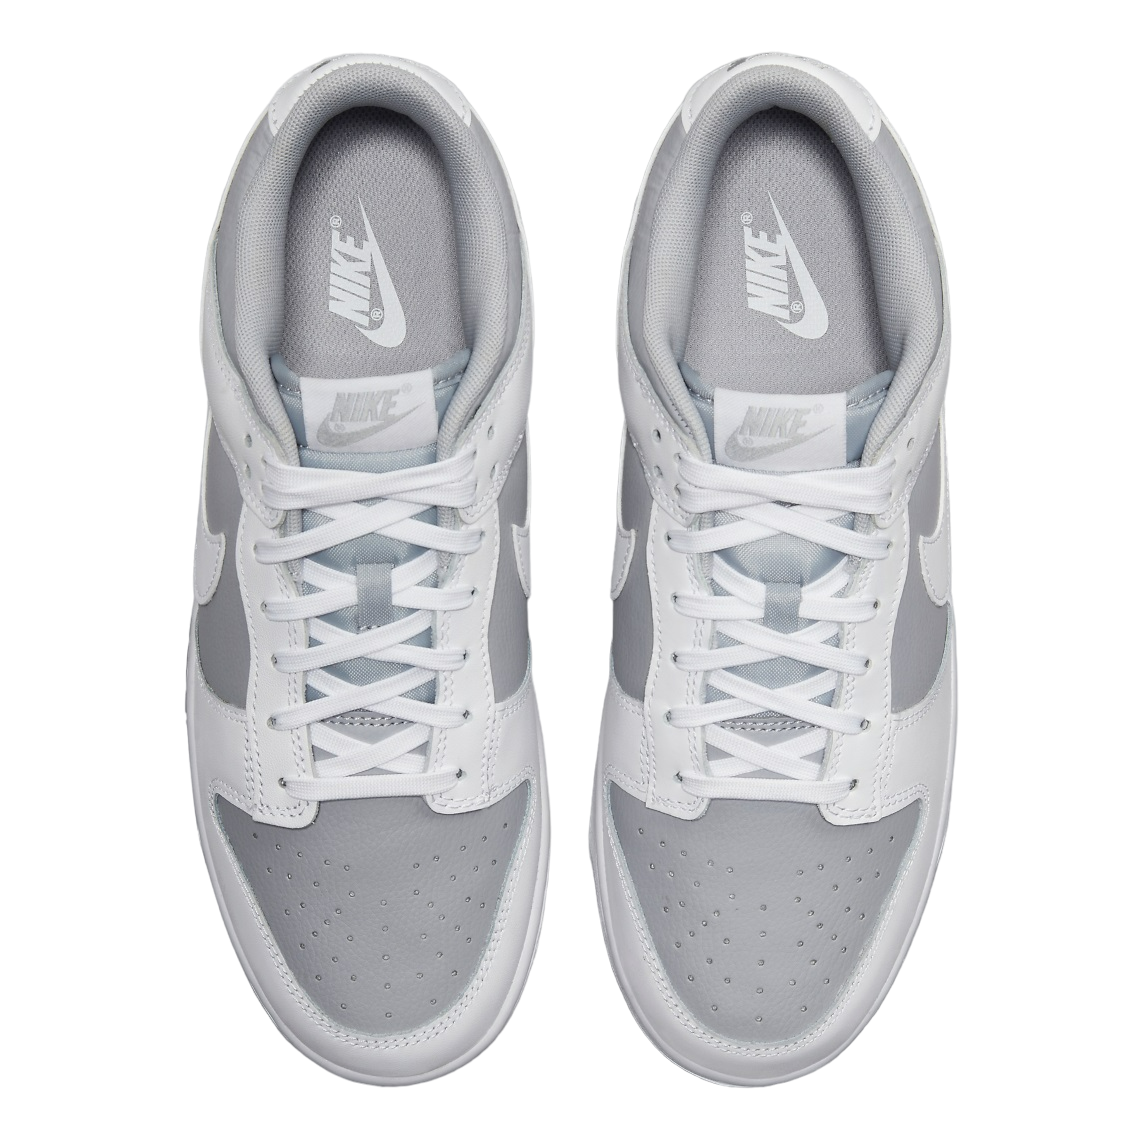 Nike Dunk Low - Grey/White "Reverse Two Tone"